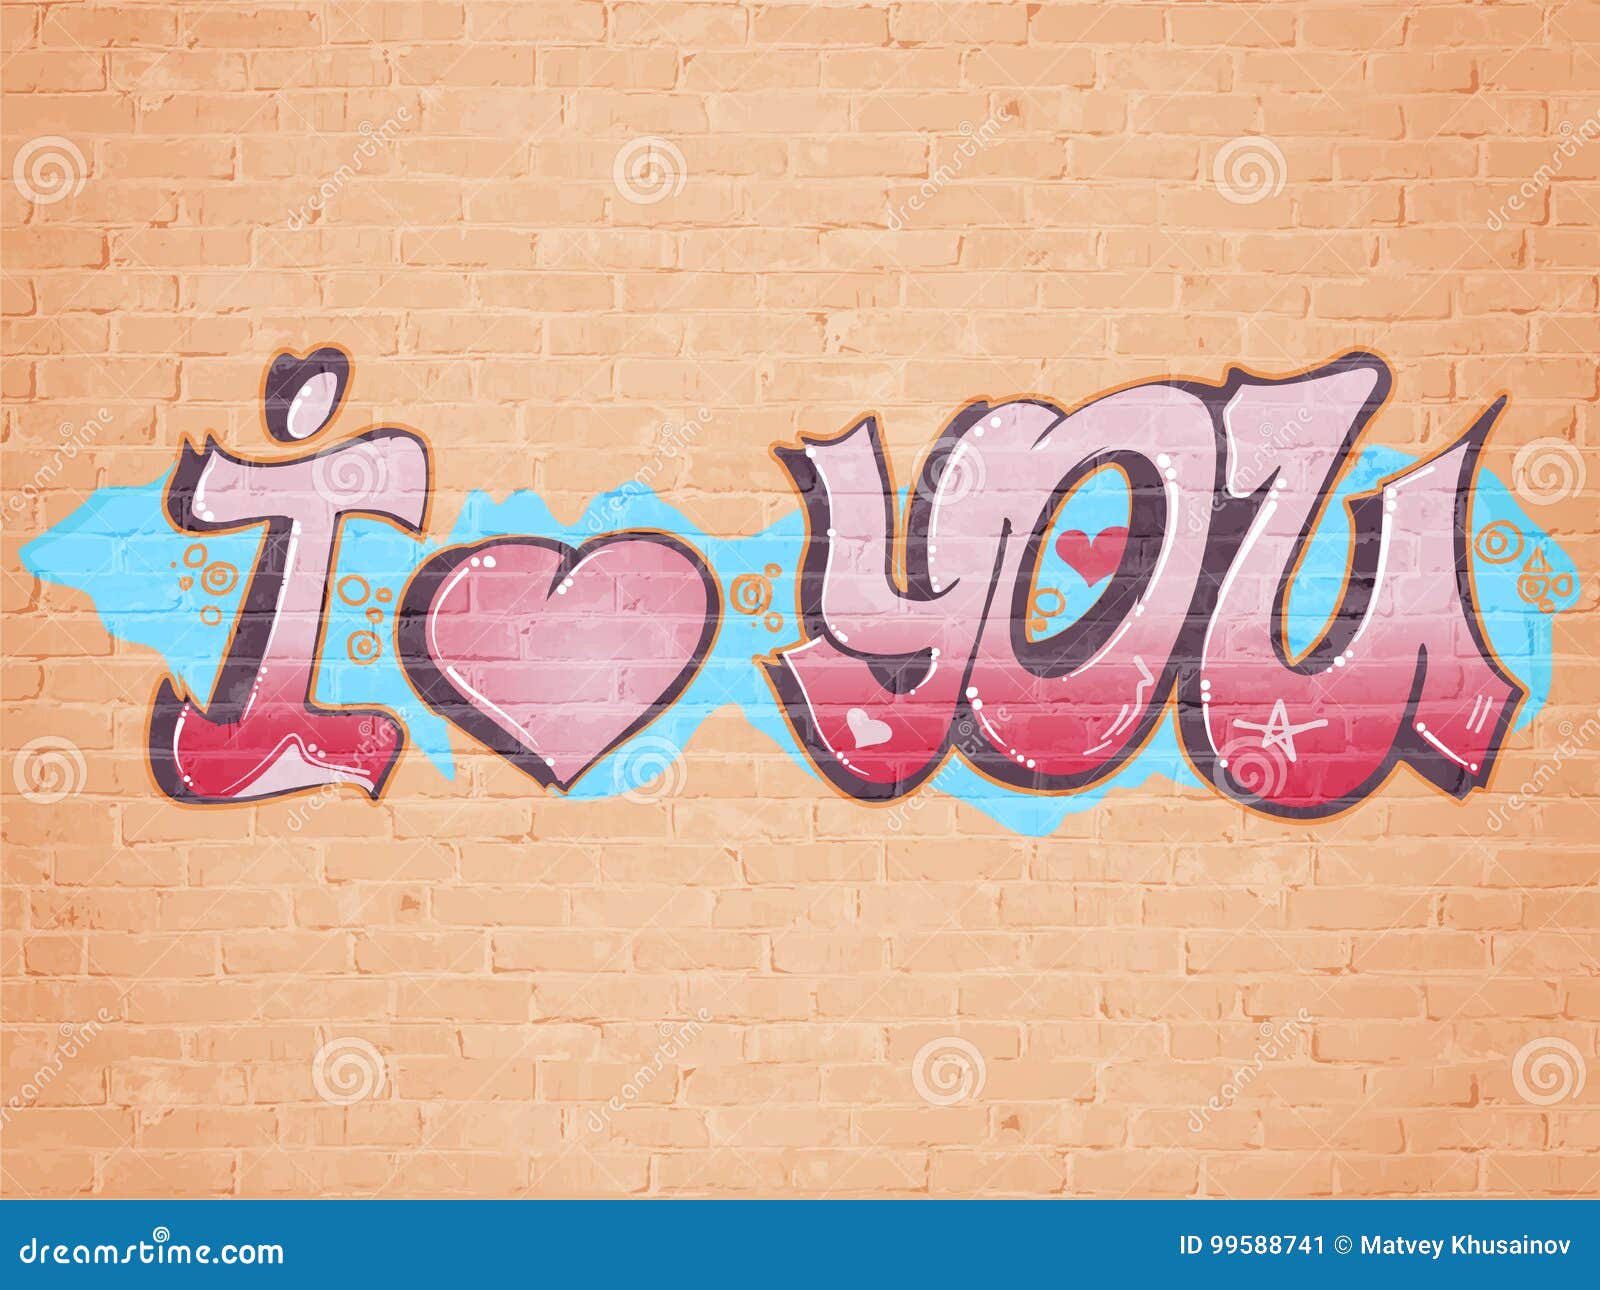 I love you graffiti style stock vector. Illustration of decoration